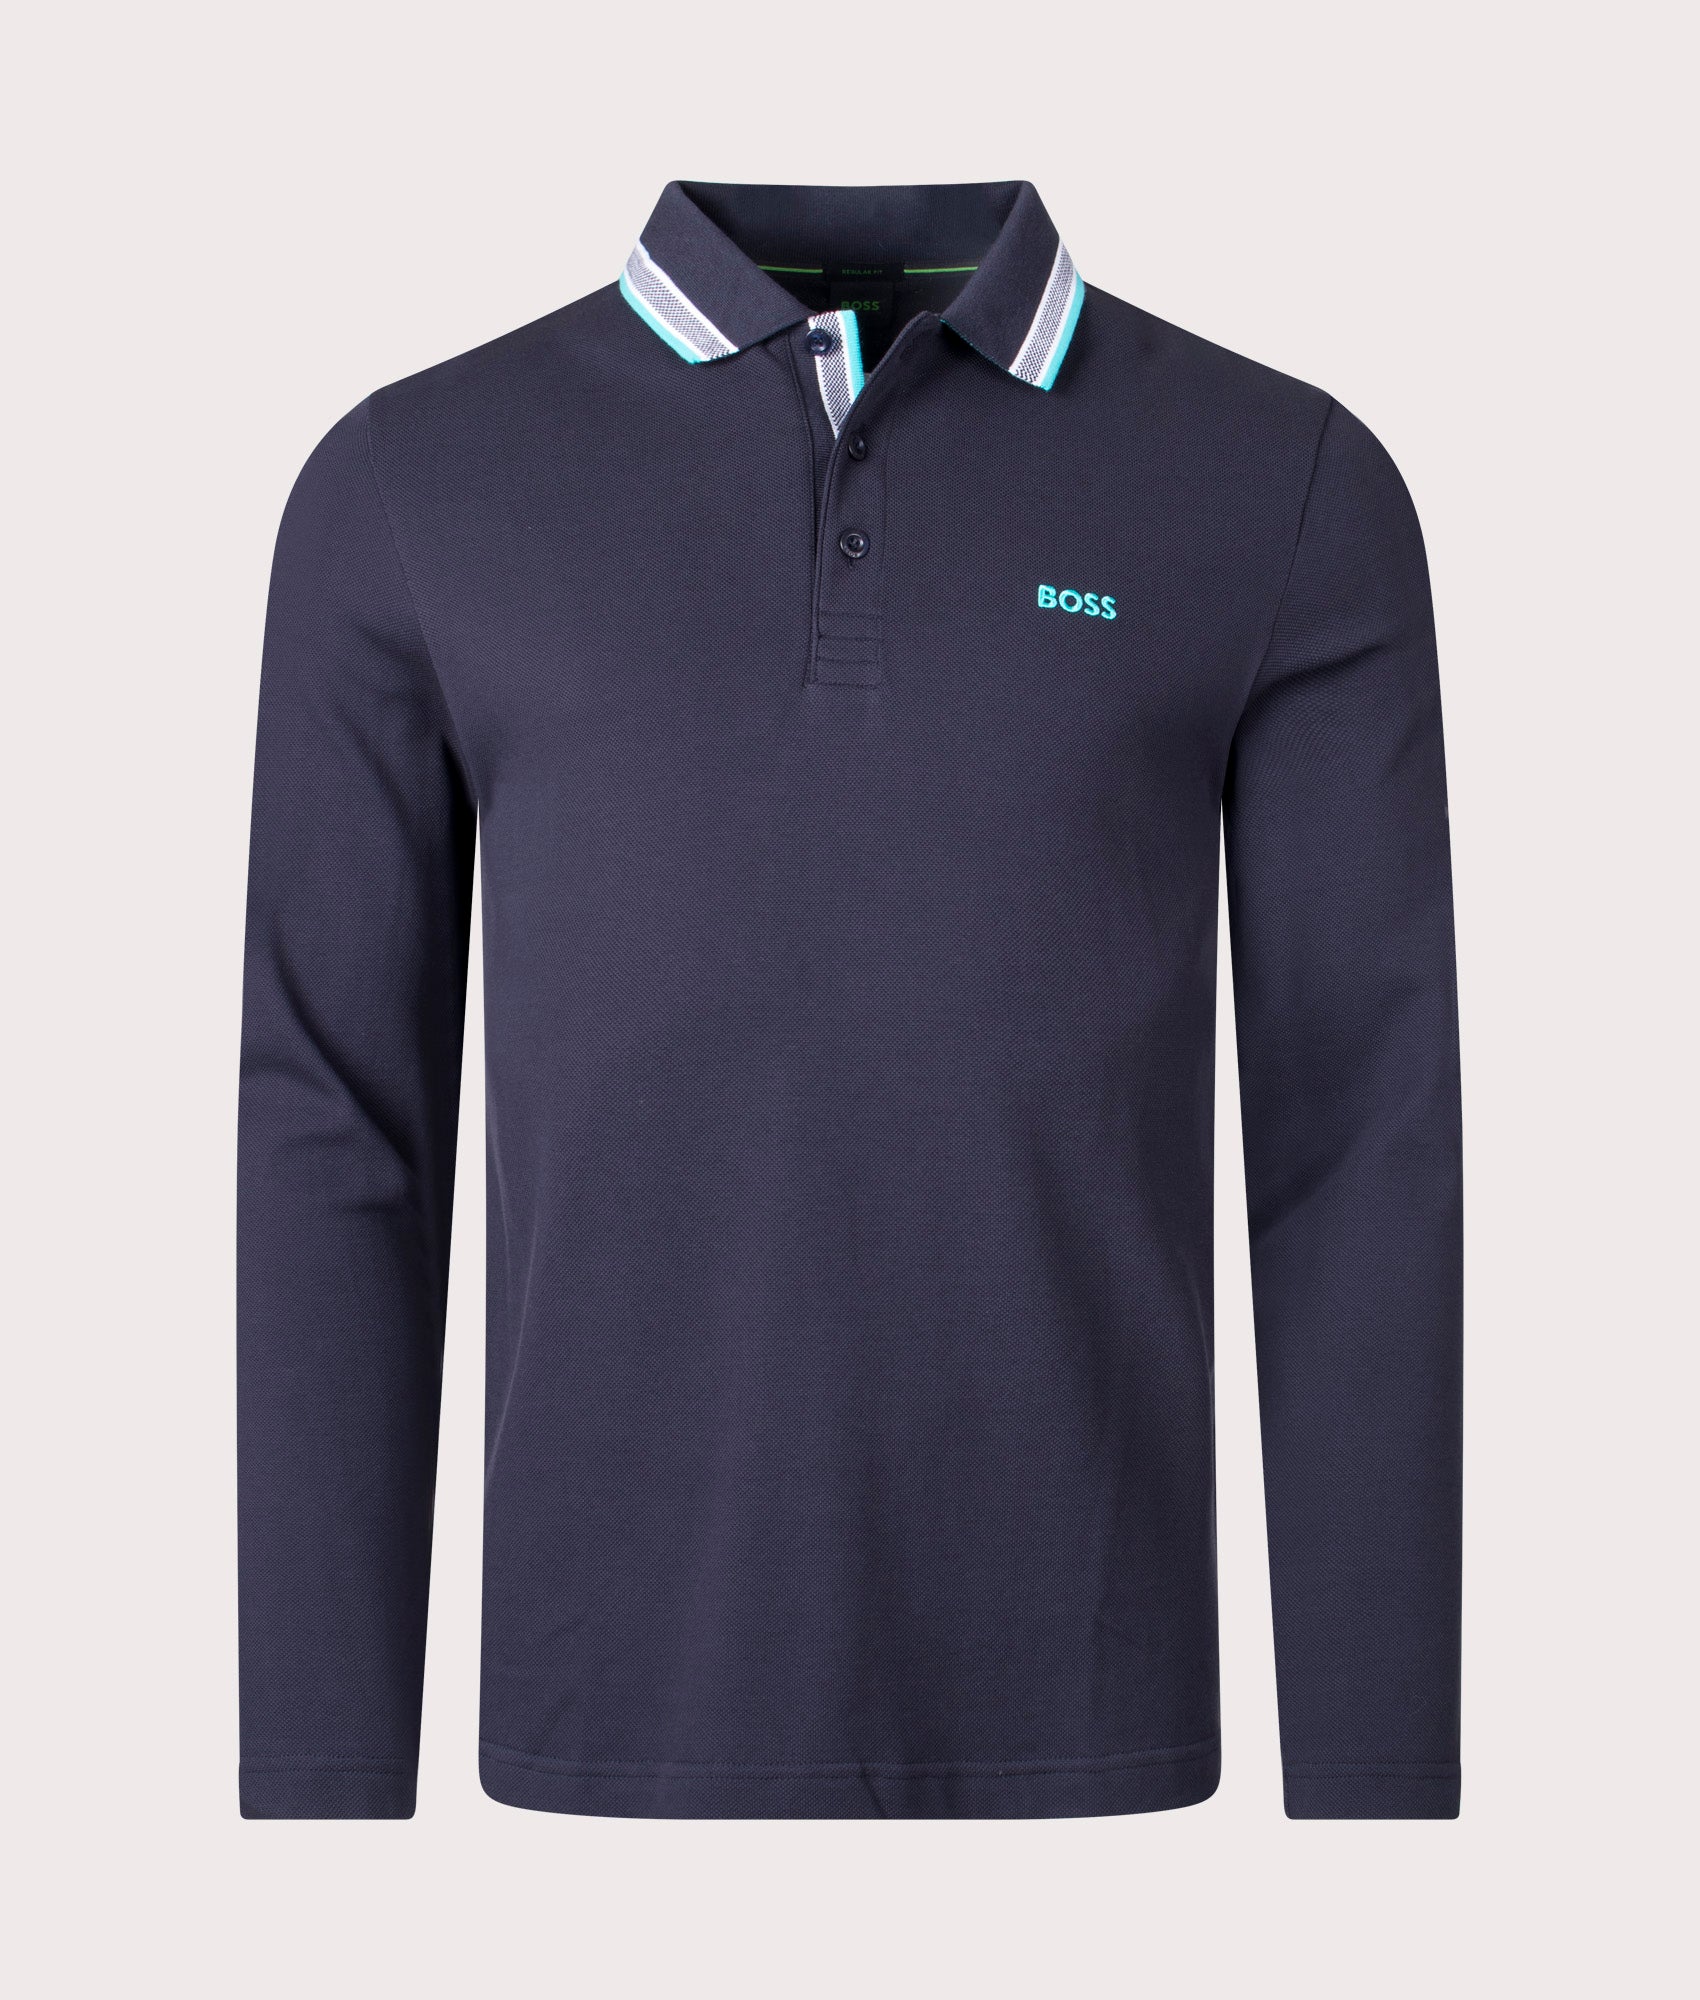 BOSS Mens Plisy Long Sleeve Polo Shirt - Colour: 402 Dark Blue - Size: XL